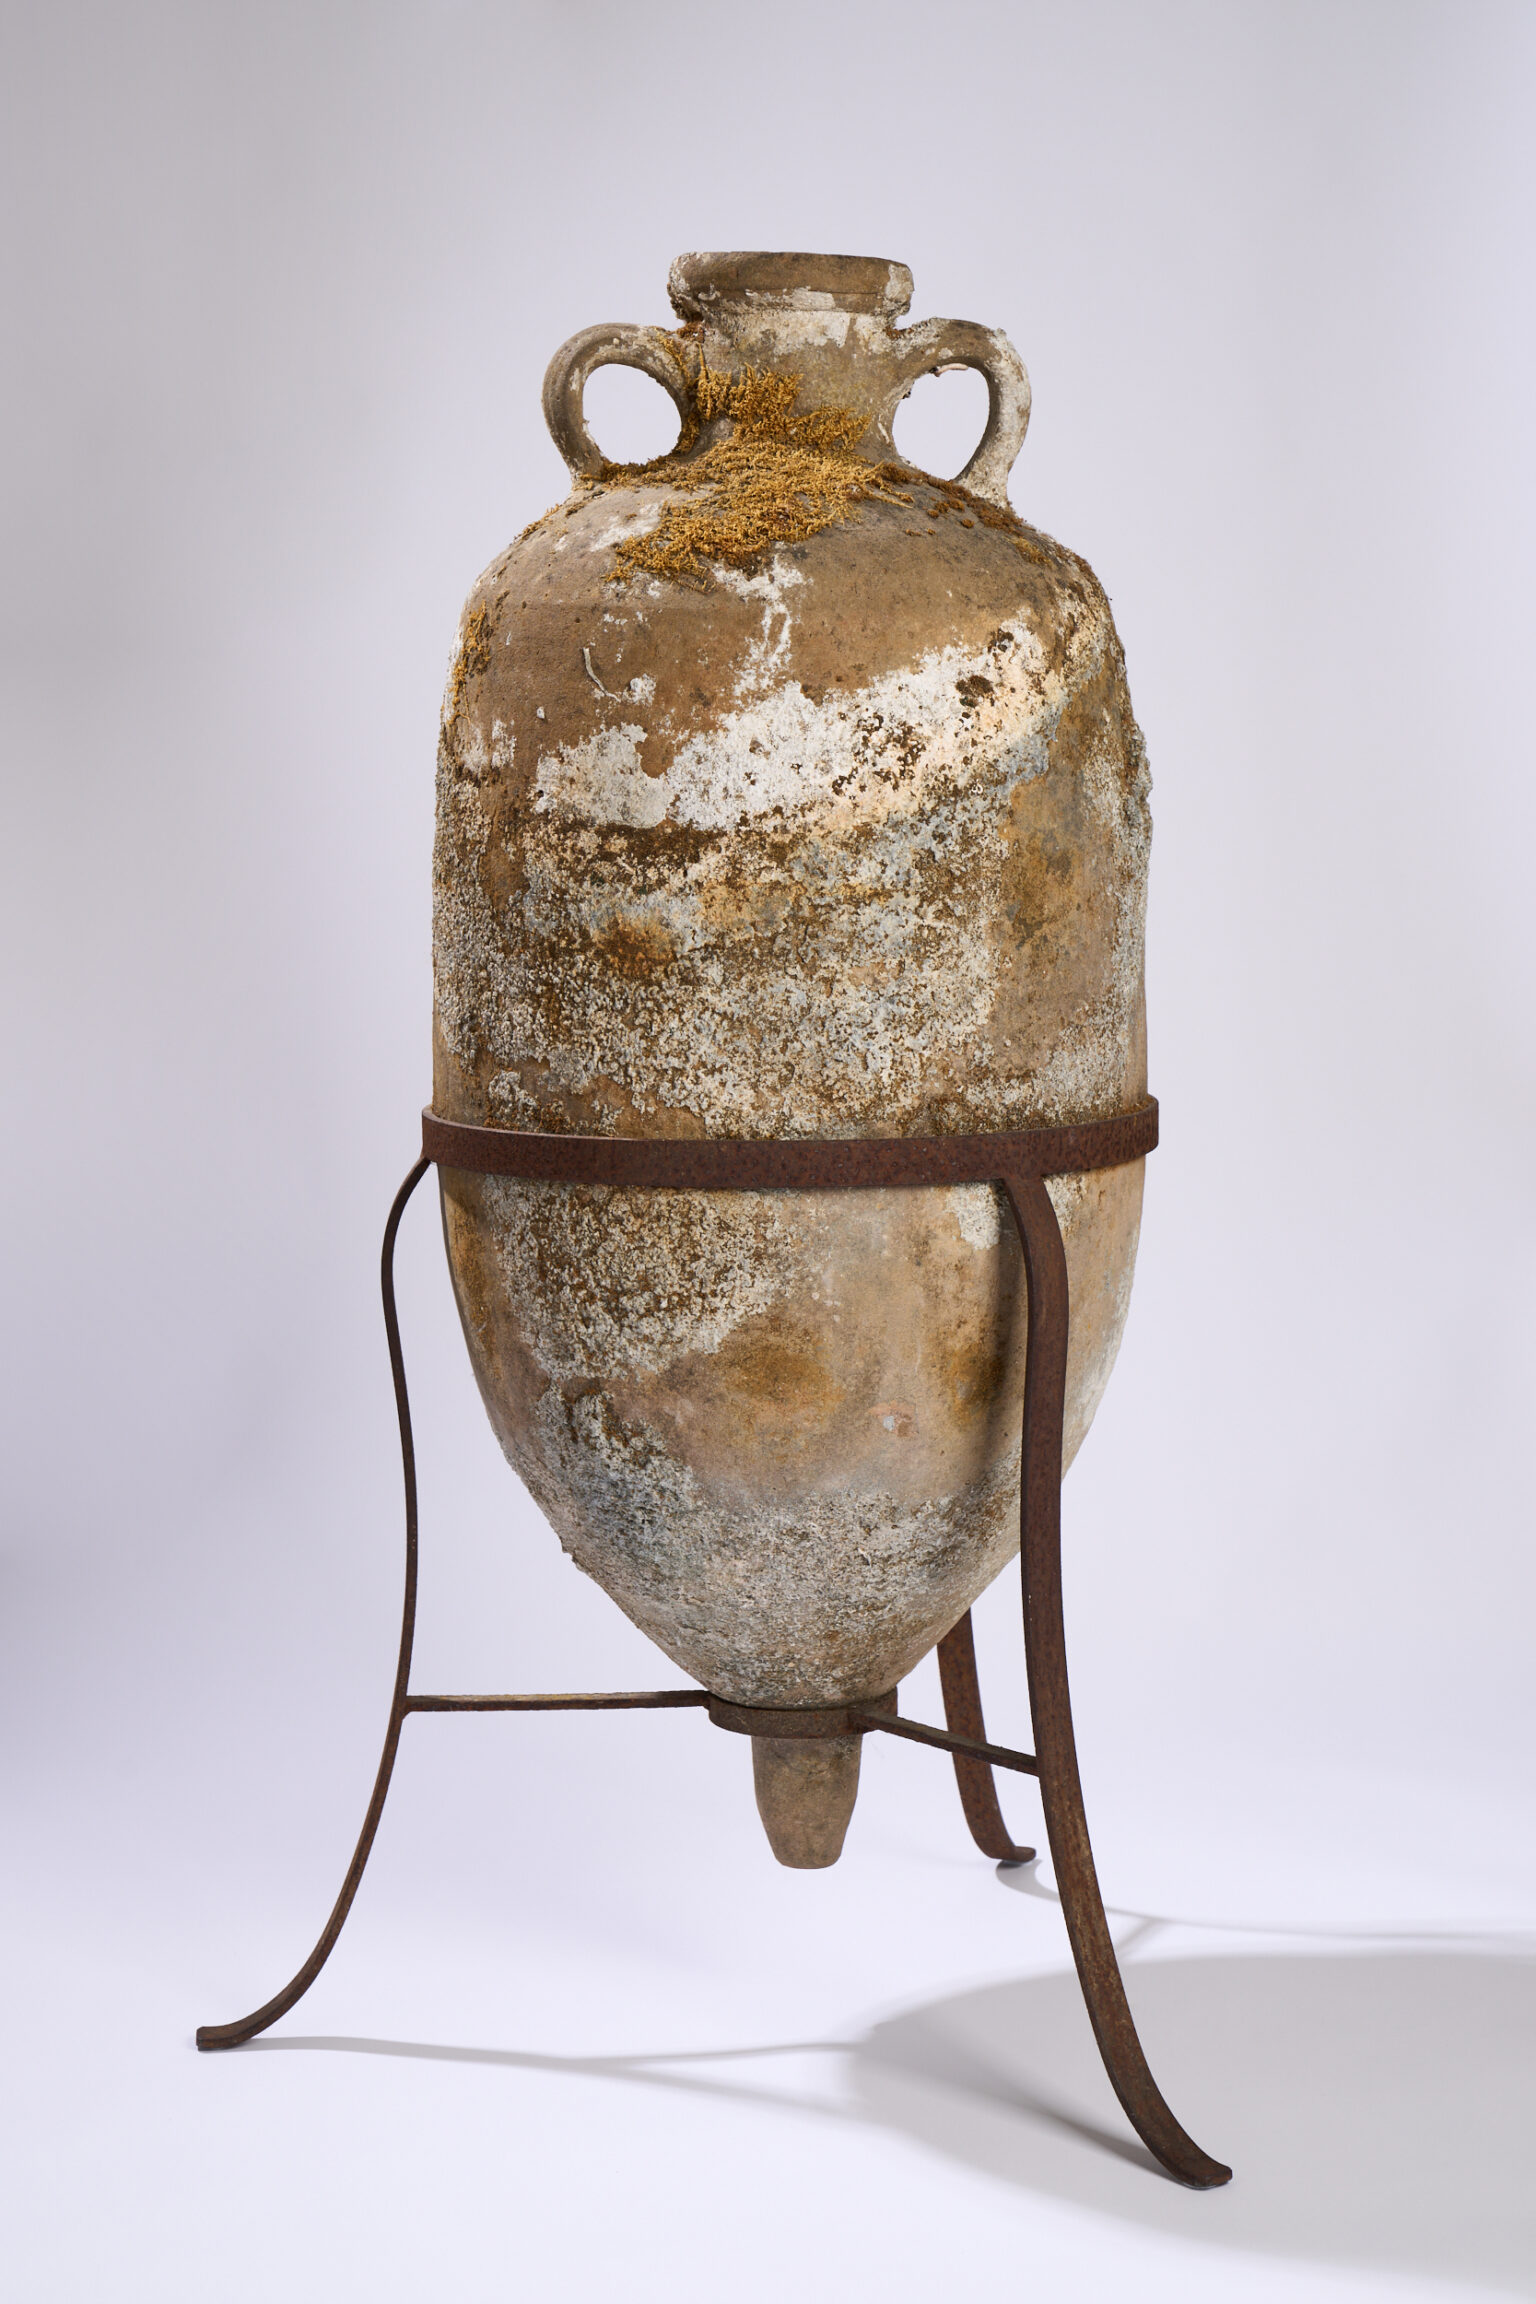 Ancient storage amphora